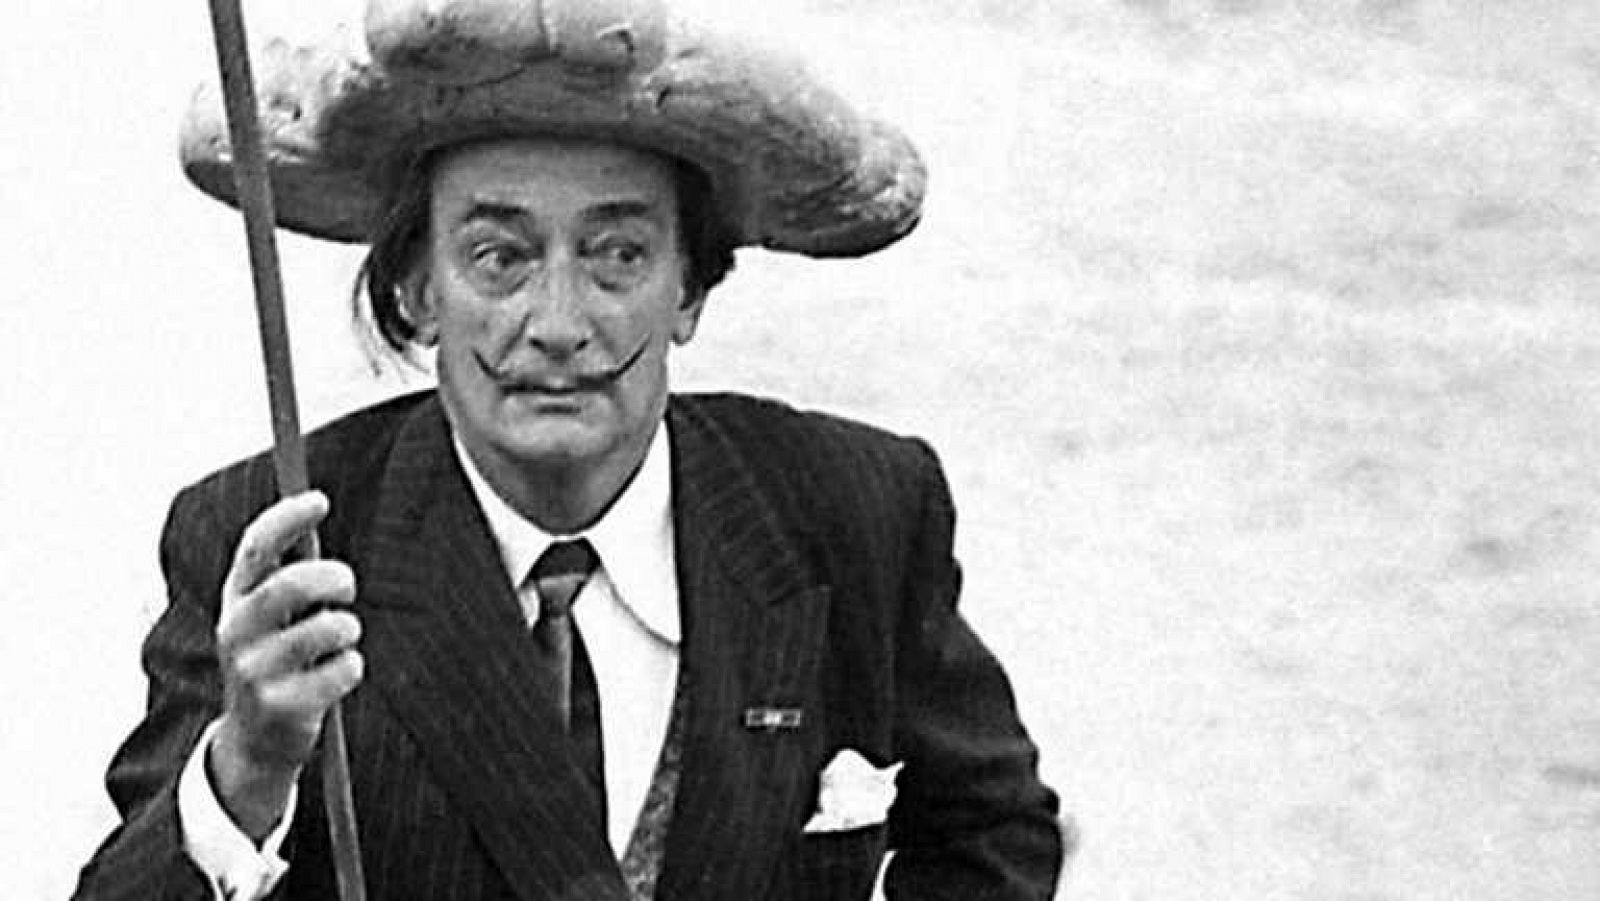 La mitad invisible - Portlligat, Salvador Dalí